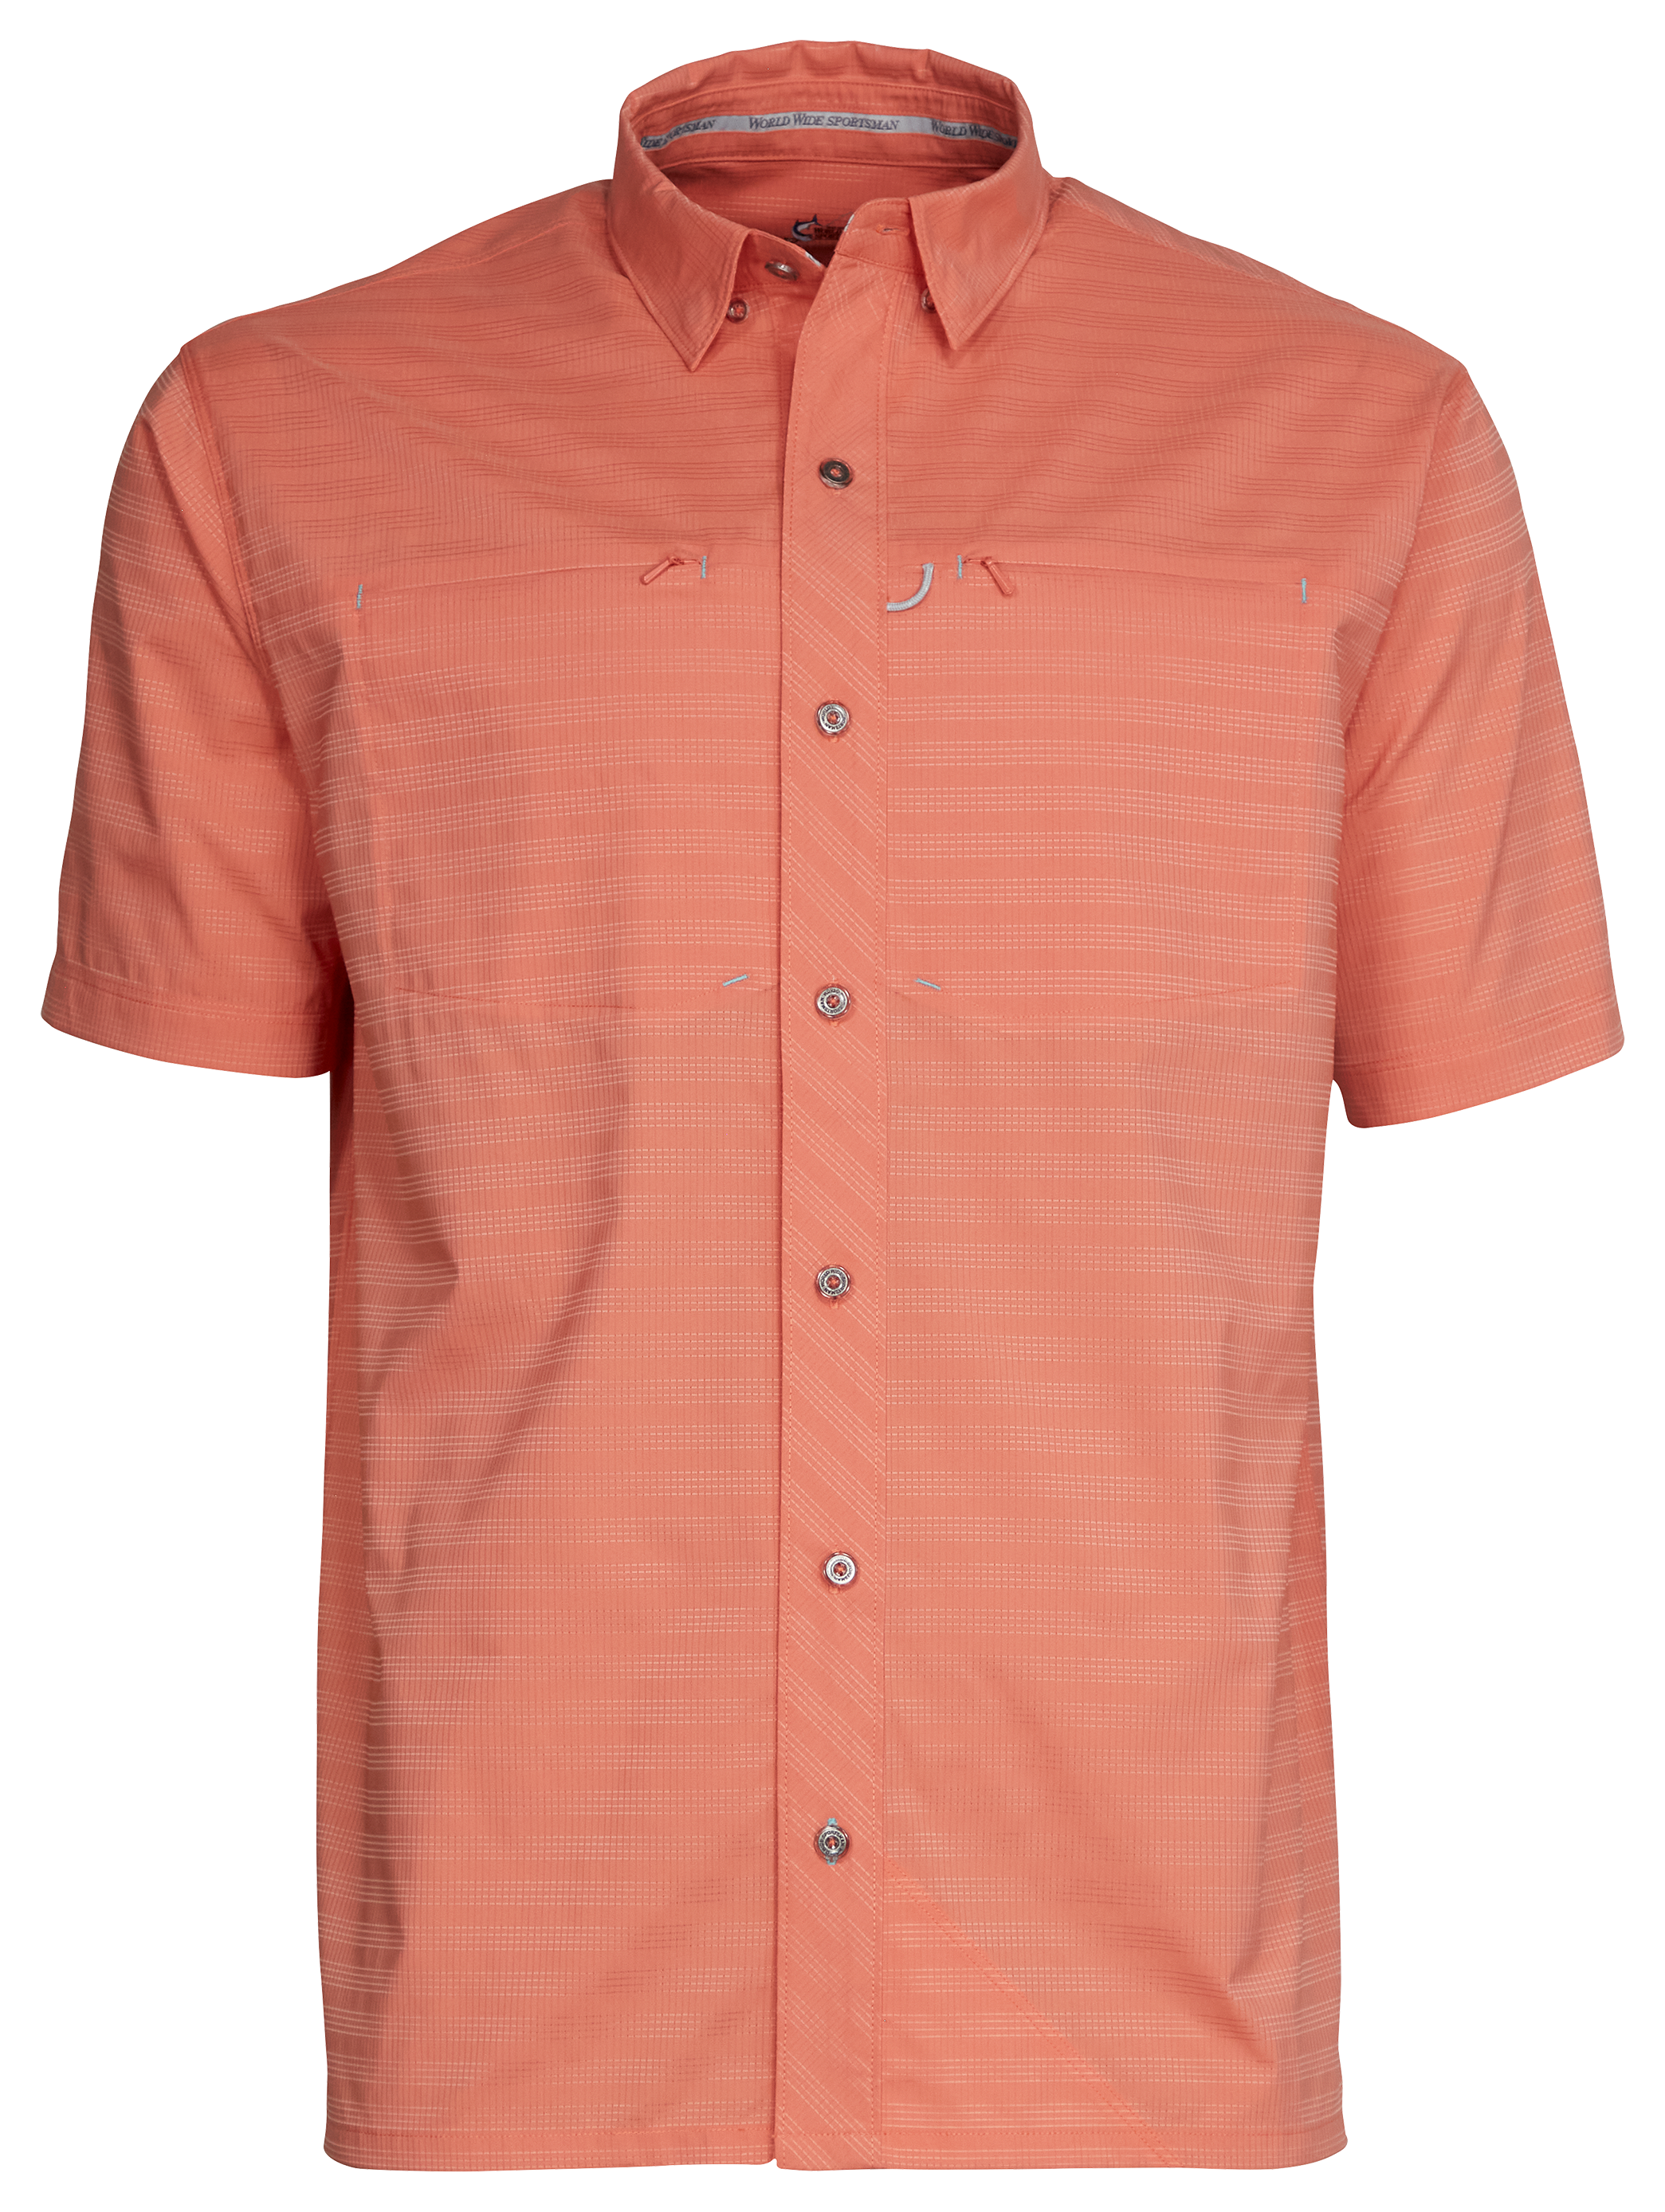 World Wide Sportsman Seacrest 2-Pocket Short-Sleeve Button-Down Shirt for Men - Crabapple - XL